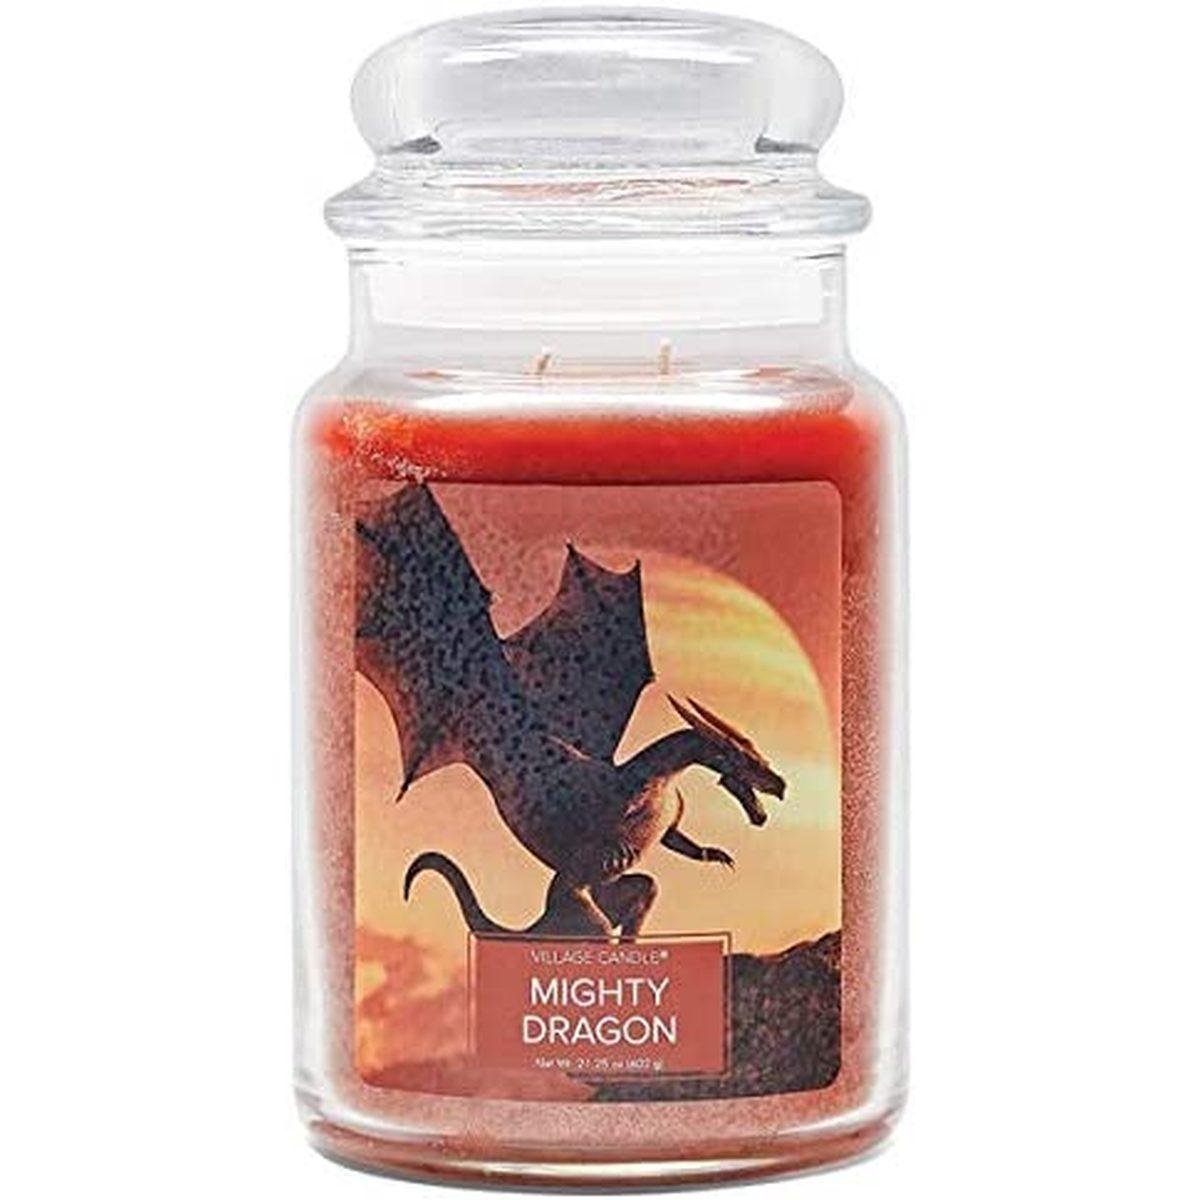 Village Candle Mighty Dragon jar